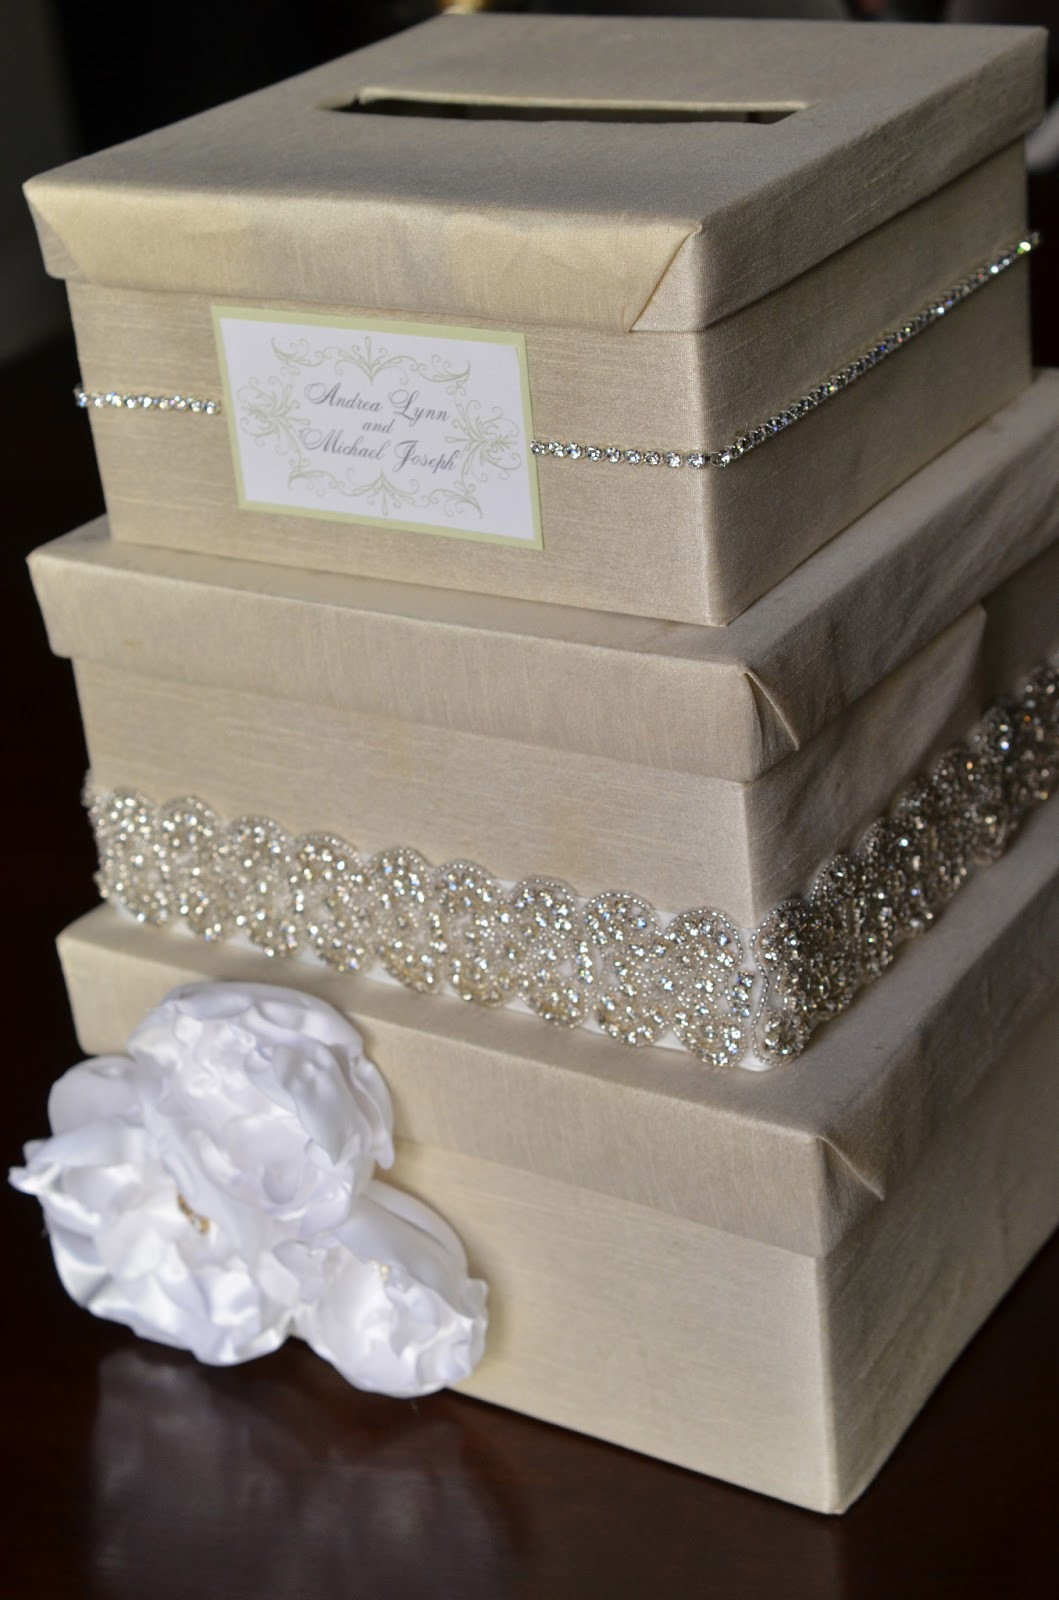 Best ideas about DIY Card Box
. Save or Pin DIY Wedding Card Box Tutorial Andrea Lynn HANDMADE Now.